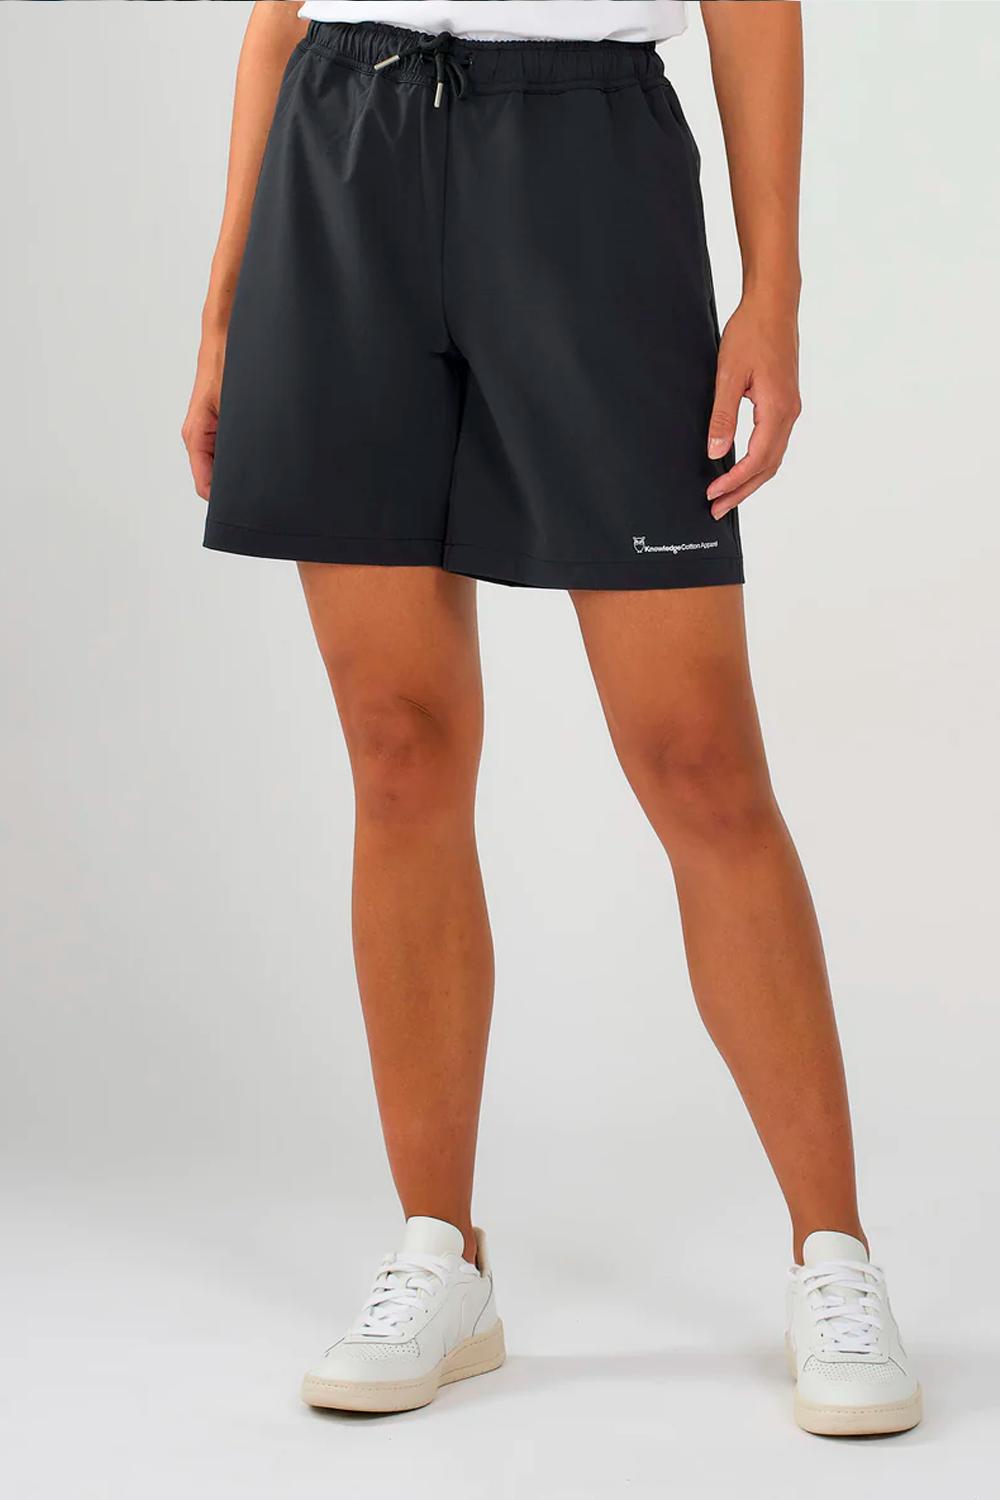 Stretch ribstrop elastic waist shorts, Black Jet